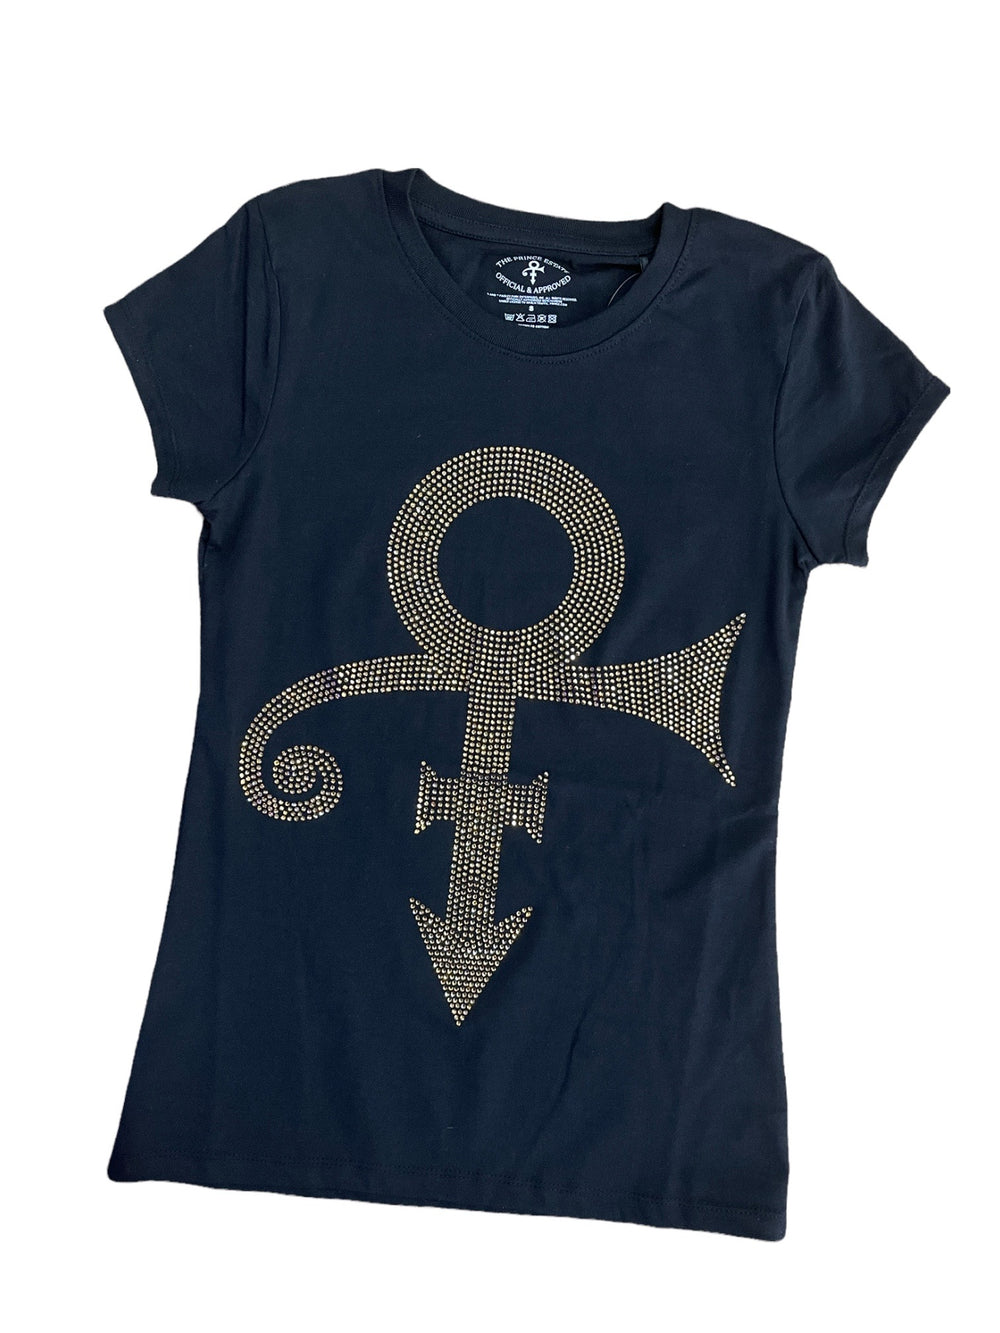 Prince – Official GOLD Love Symbol Diamante Ladies Slim Fit T-Shirt NEW